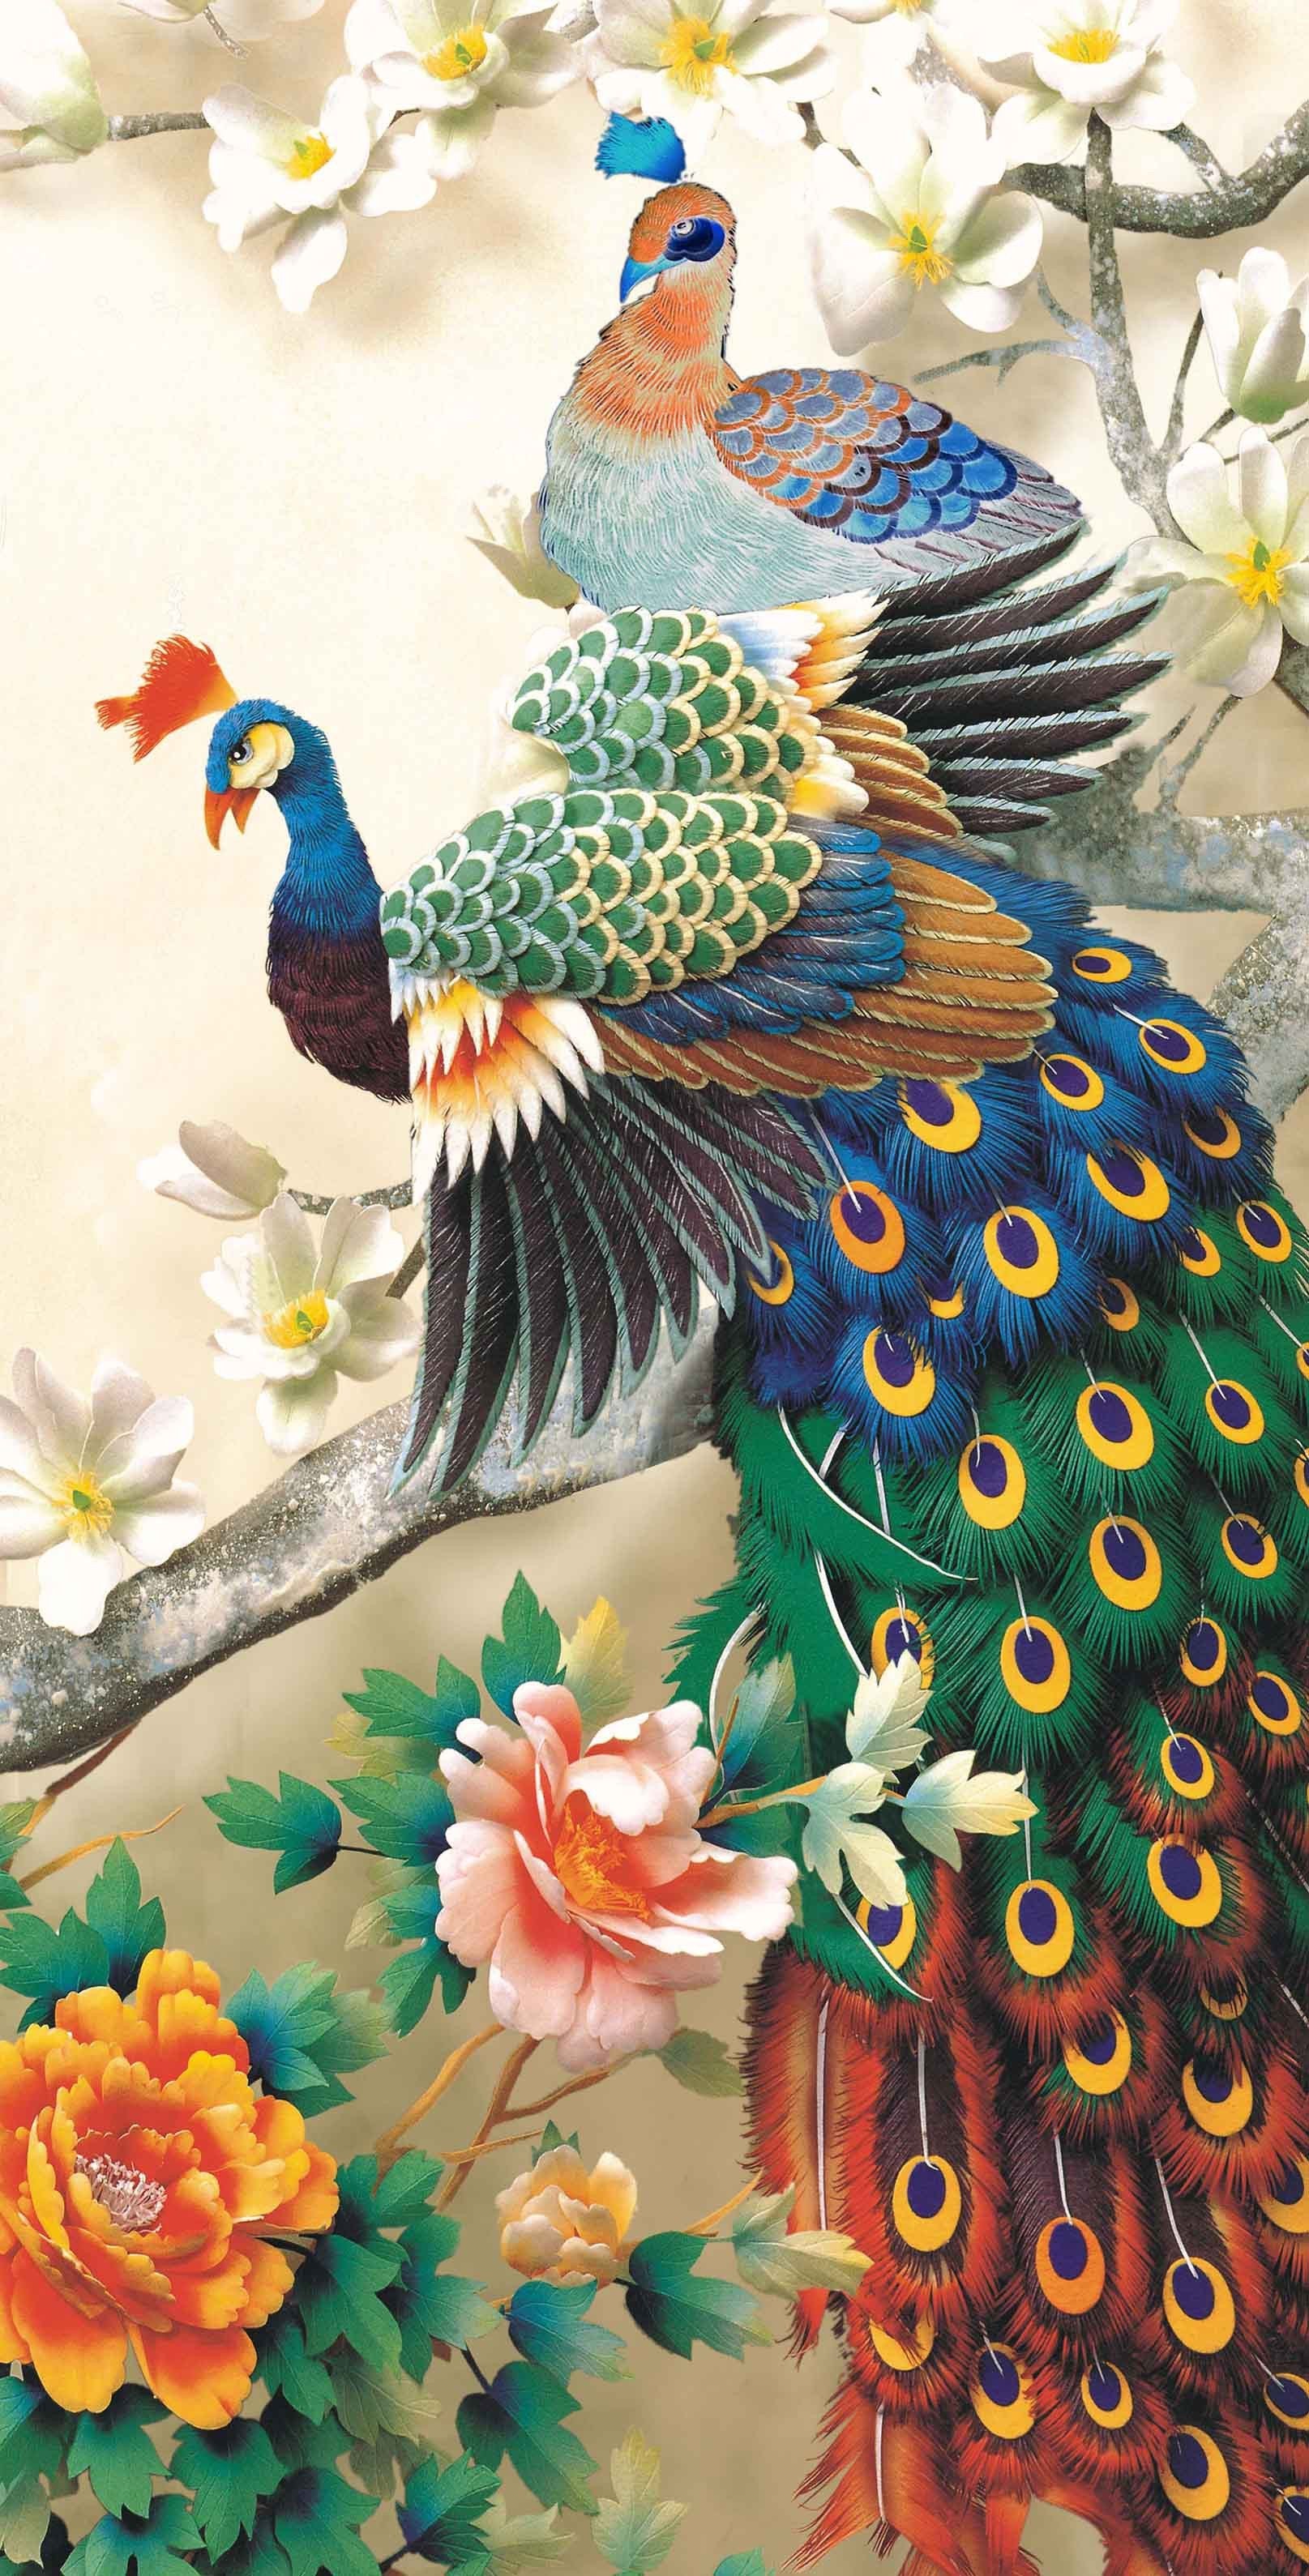 3D Flowers And Peacocks 1274 Stair Risers Wallpaper AJ Wallpaper 